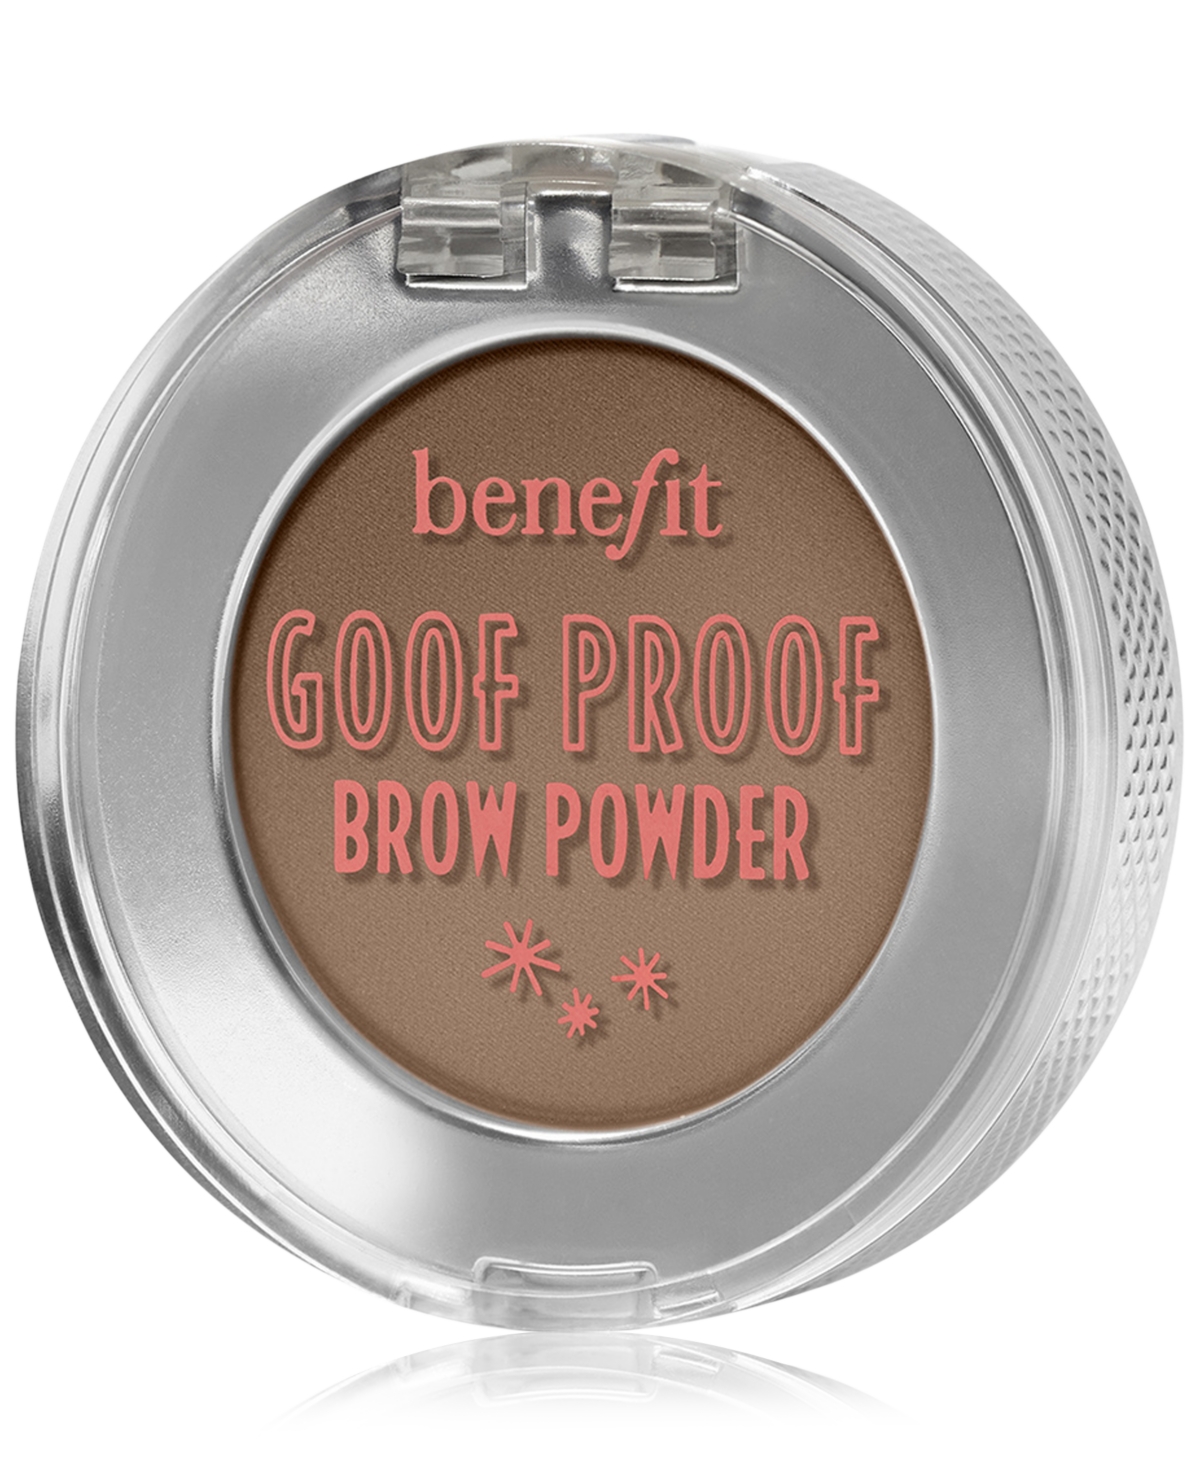 Benefit Cosmetics Goof Proof Brow Powder In - Warm Light Brown